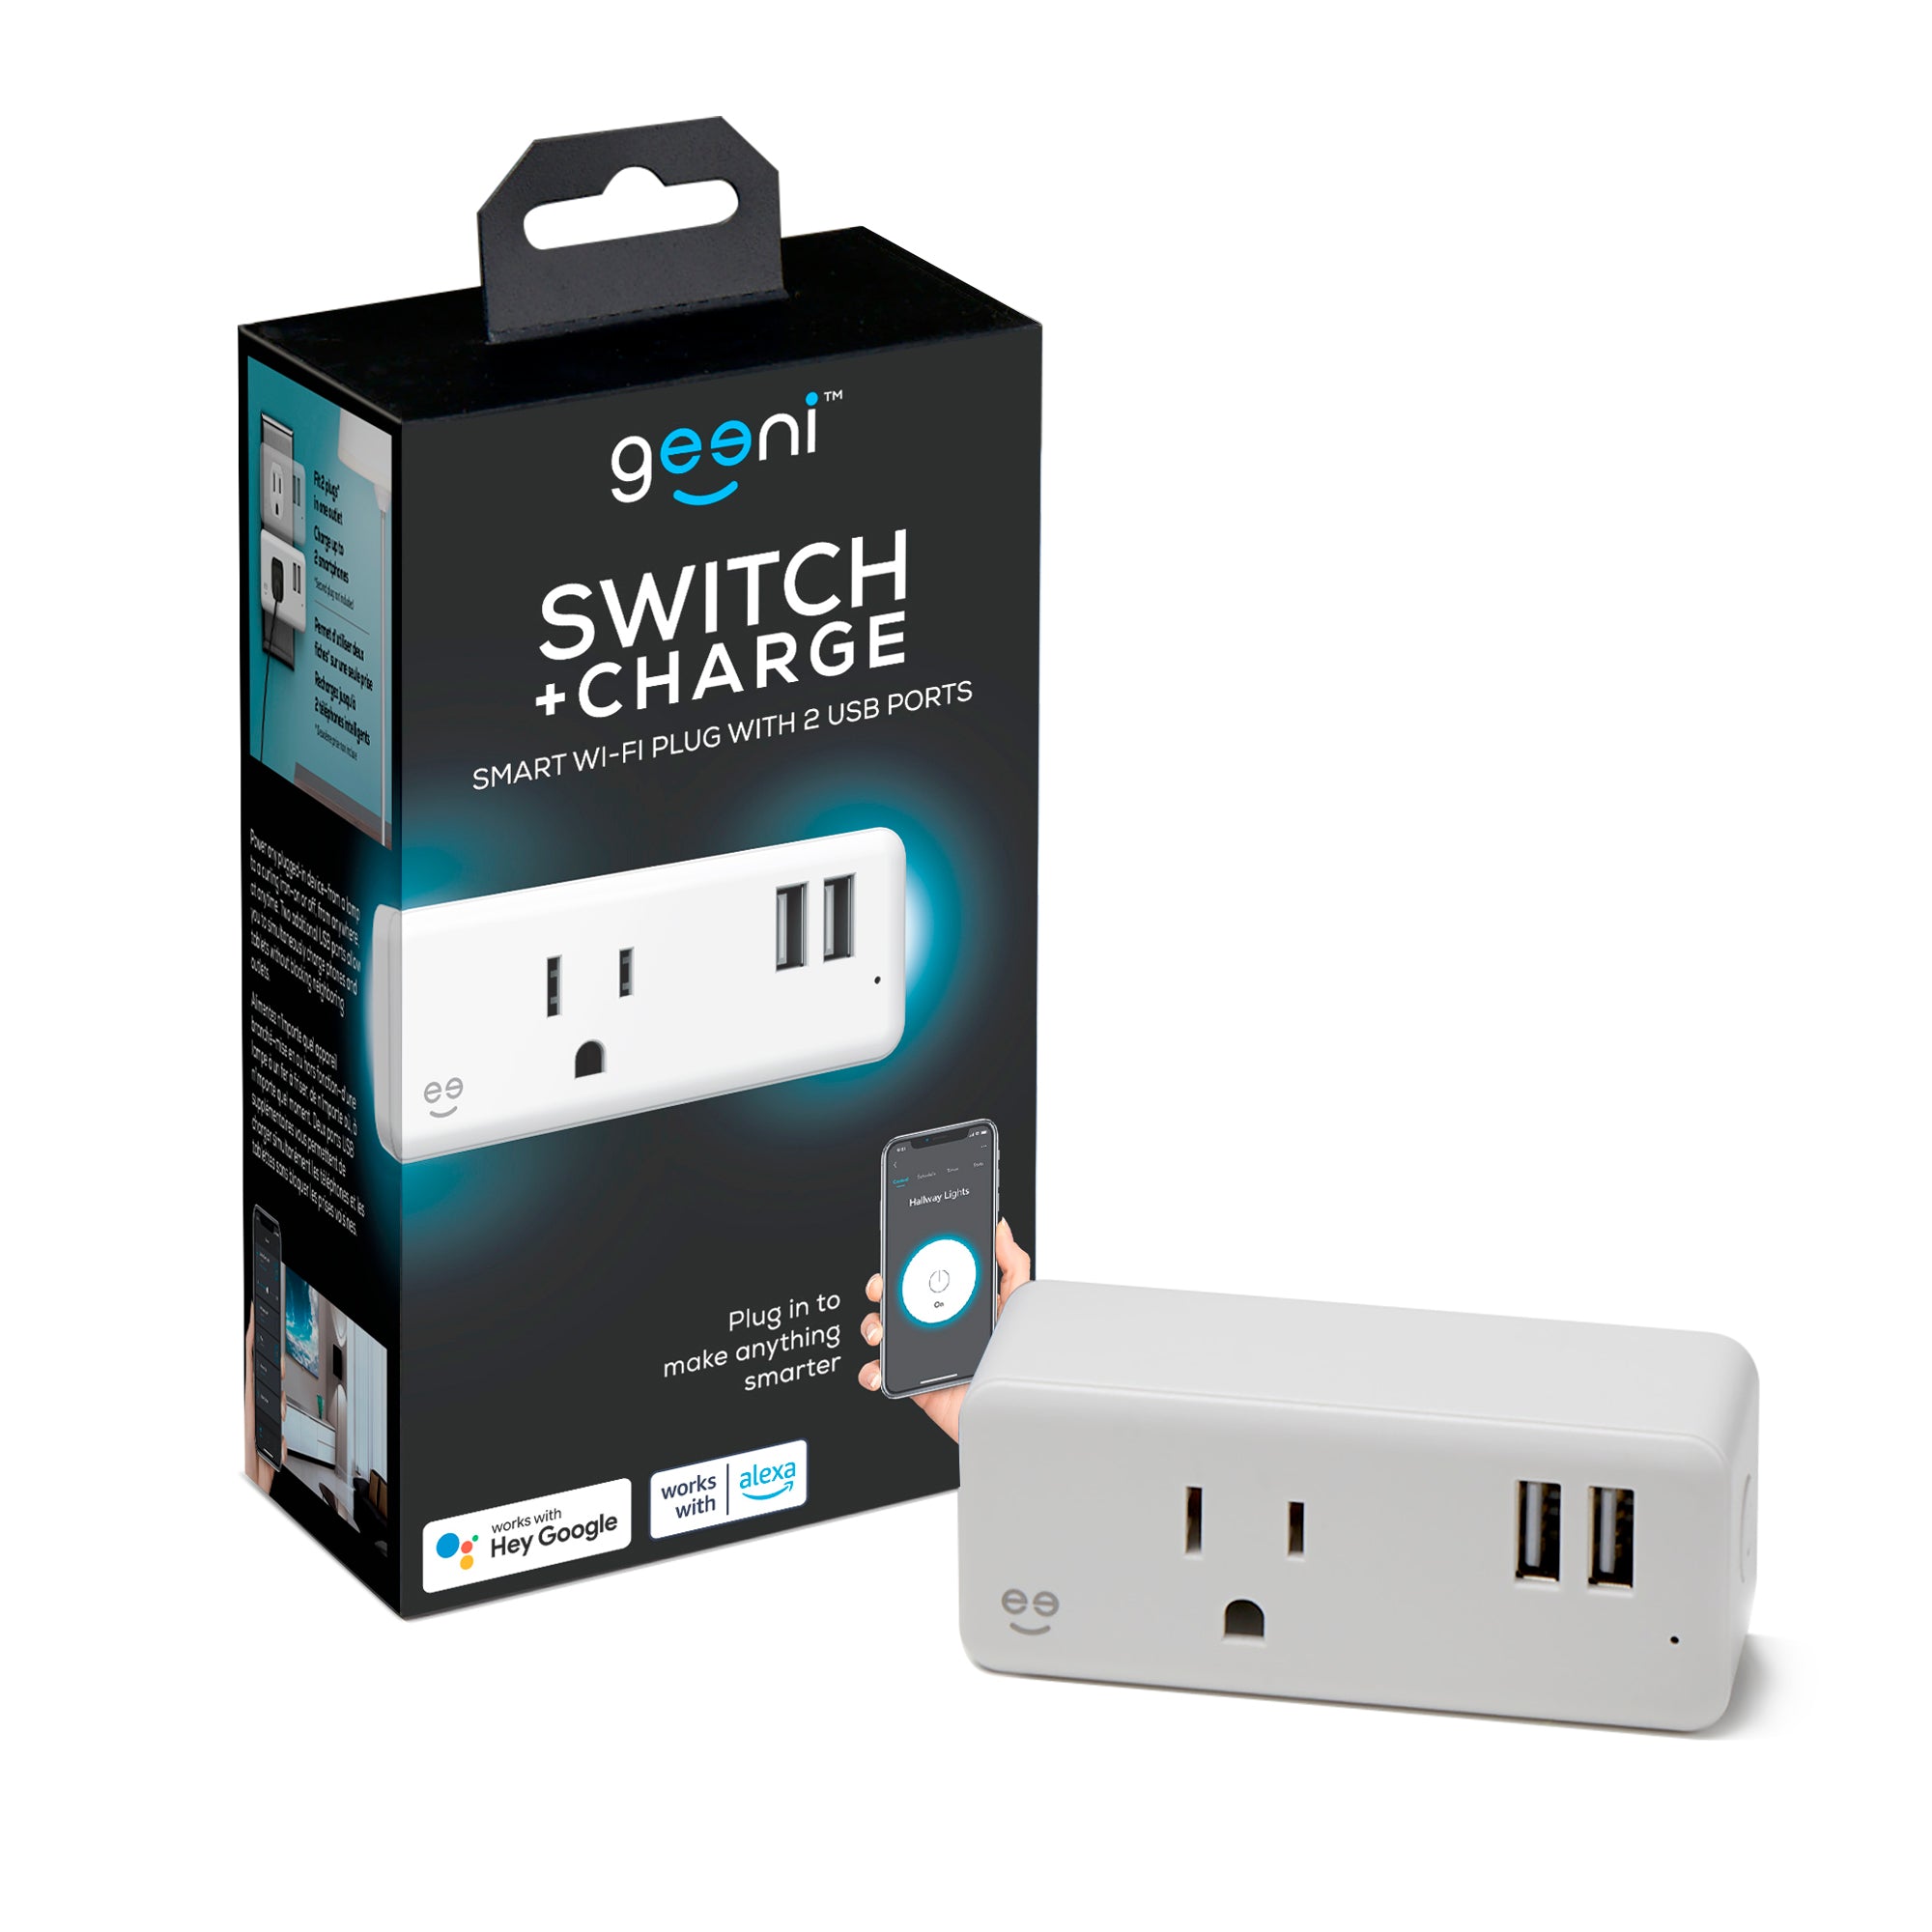 Geeni Switch + Charge Wi-Fi Plug with 2 USB Ports